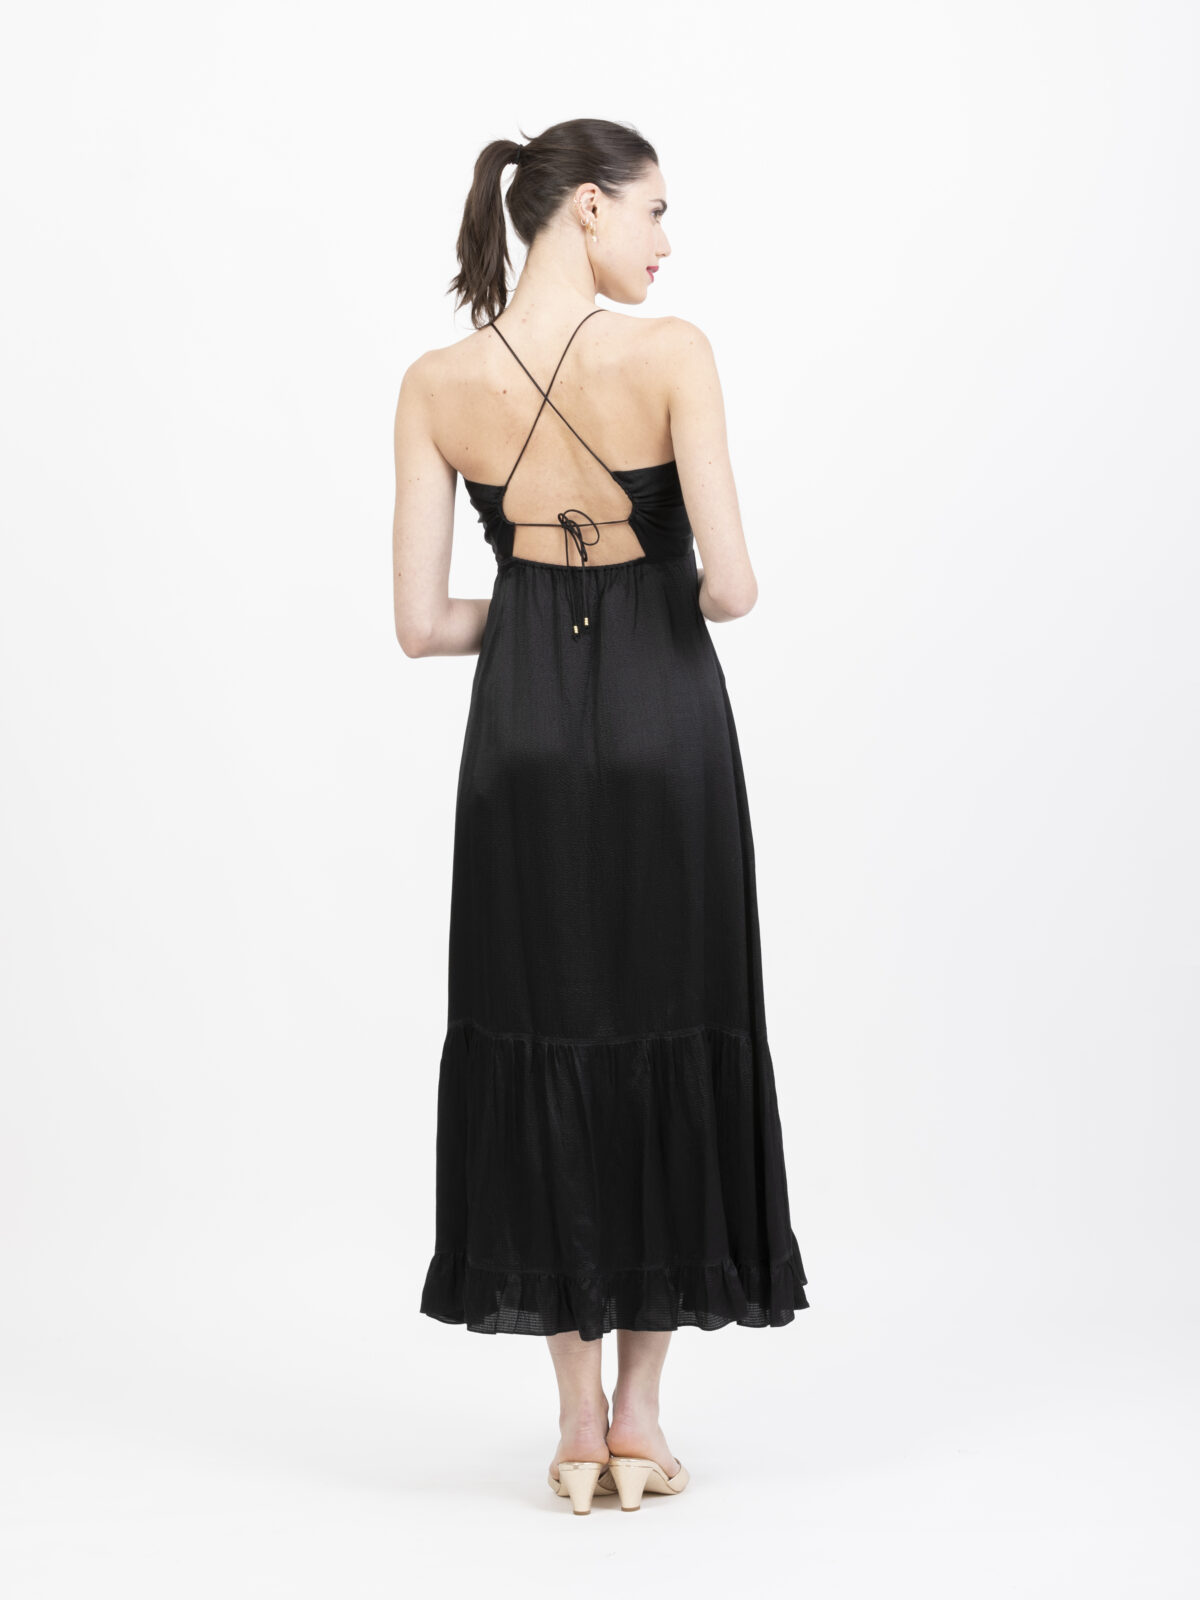 alexandra-black-silk-dress-flowing-strings-bare-back-vanessa-bruno-matchboxathens